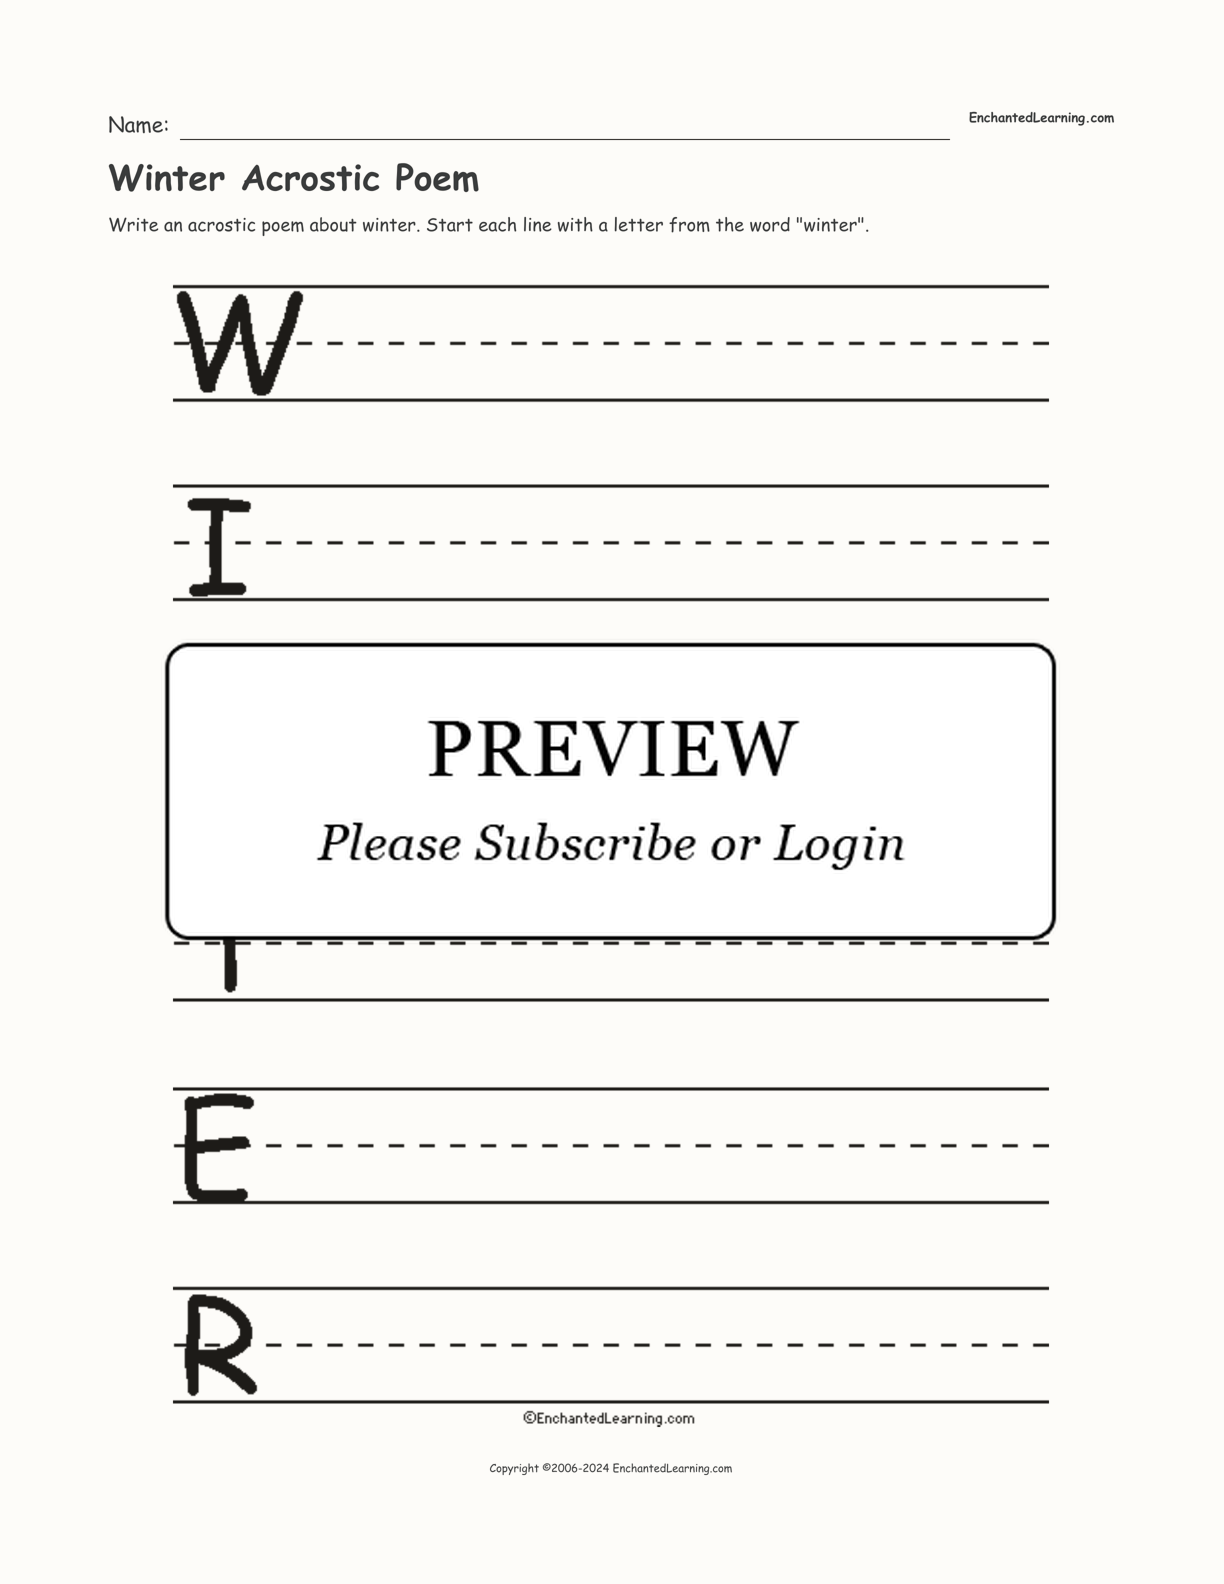 Winter Acrostic Poem interactive worksheet page 1